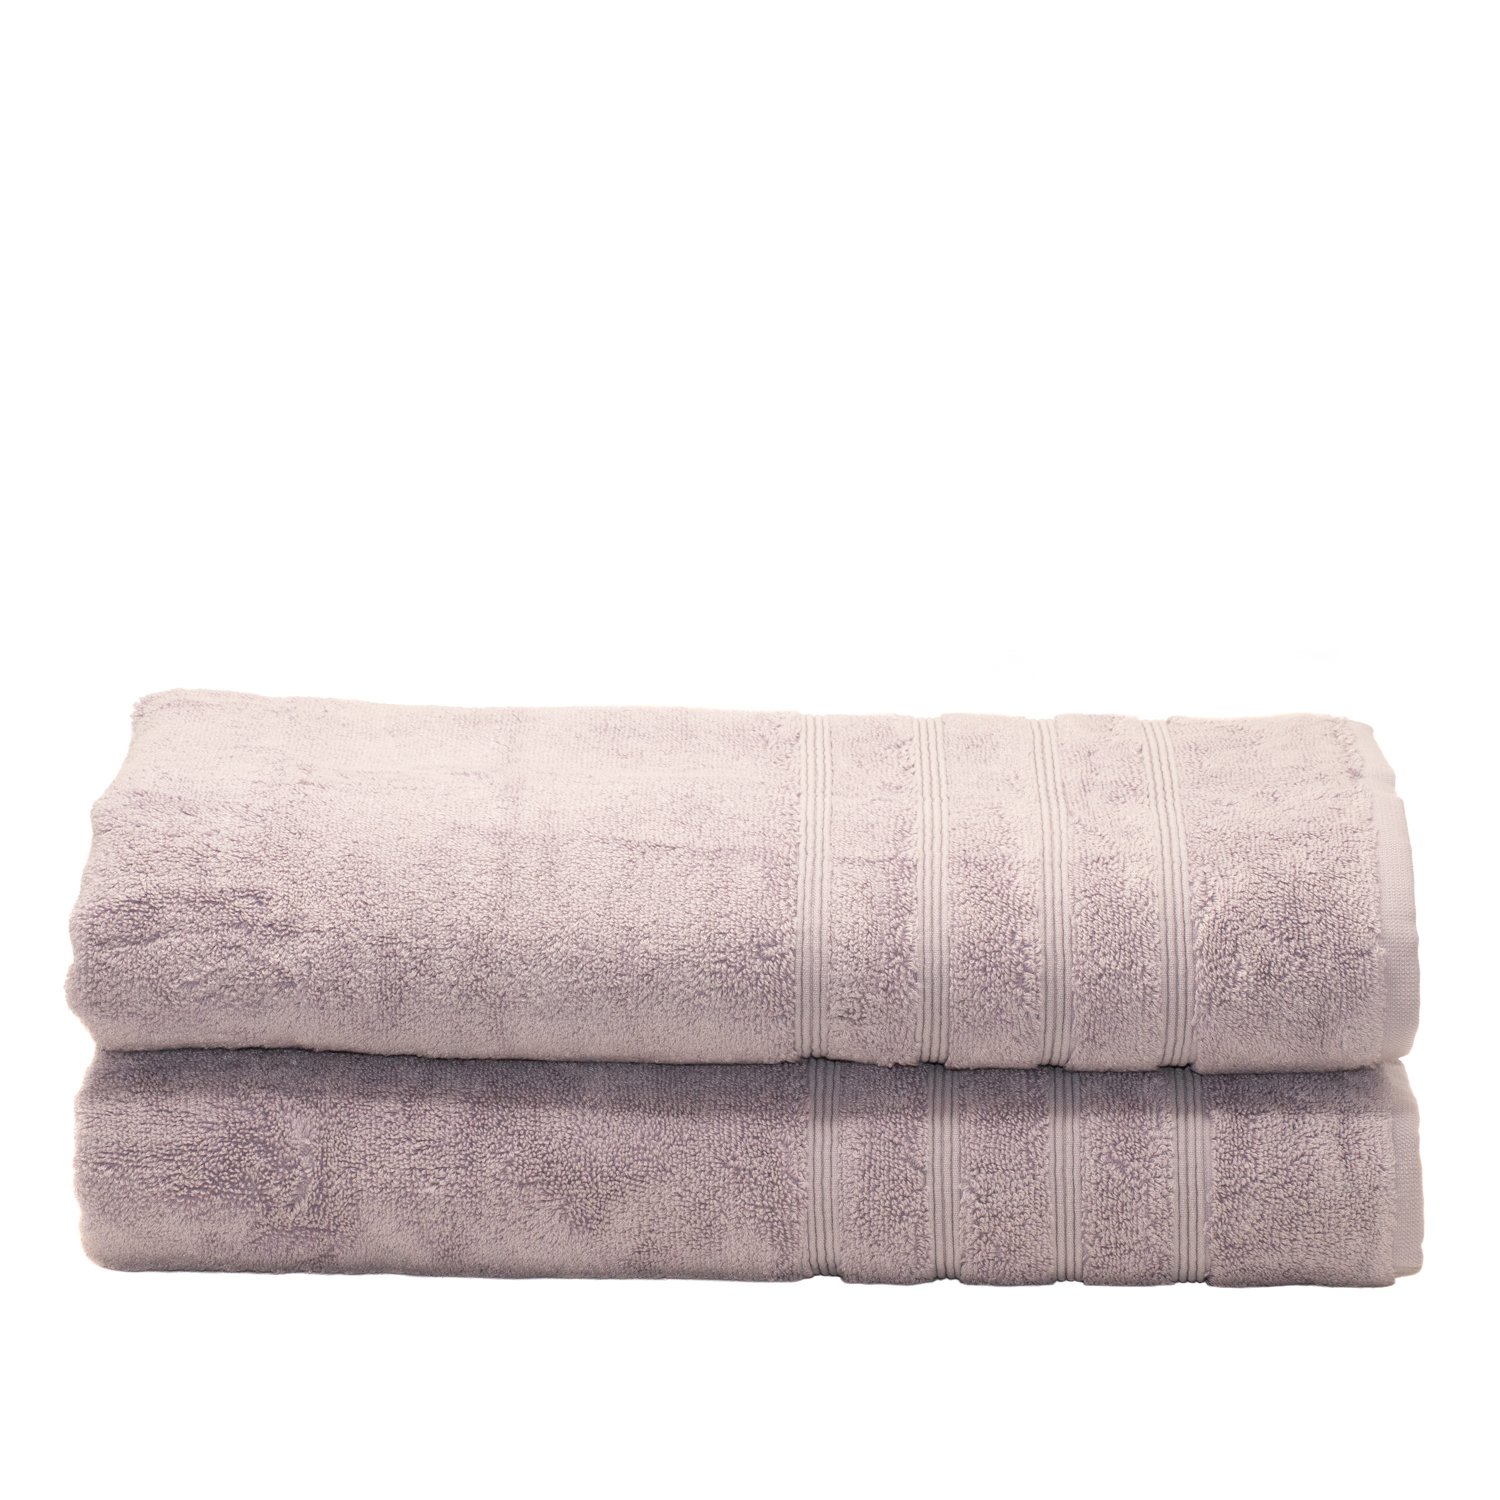 1//4pcs 100/% Turkish Cotton Large Bath Spa Towel Super Soft Absorbent 27.6”x47.